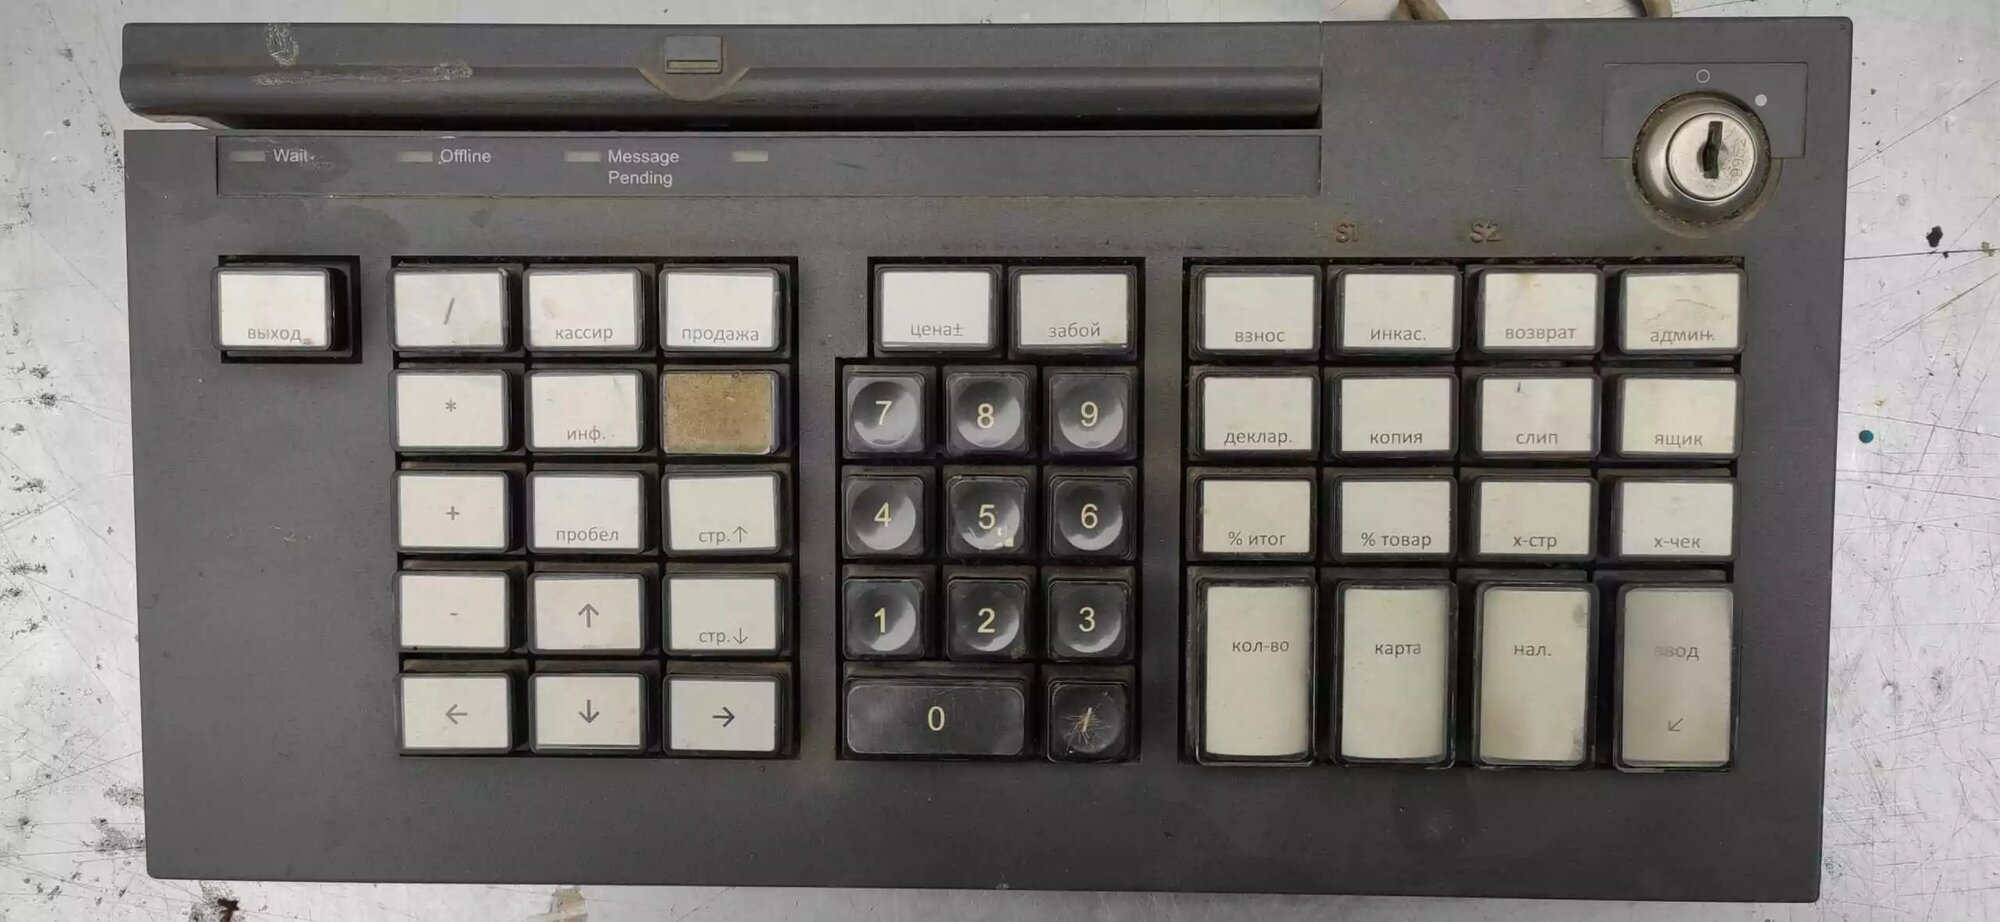 Pos-клавиатура IBM M7